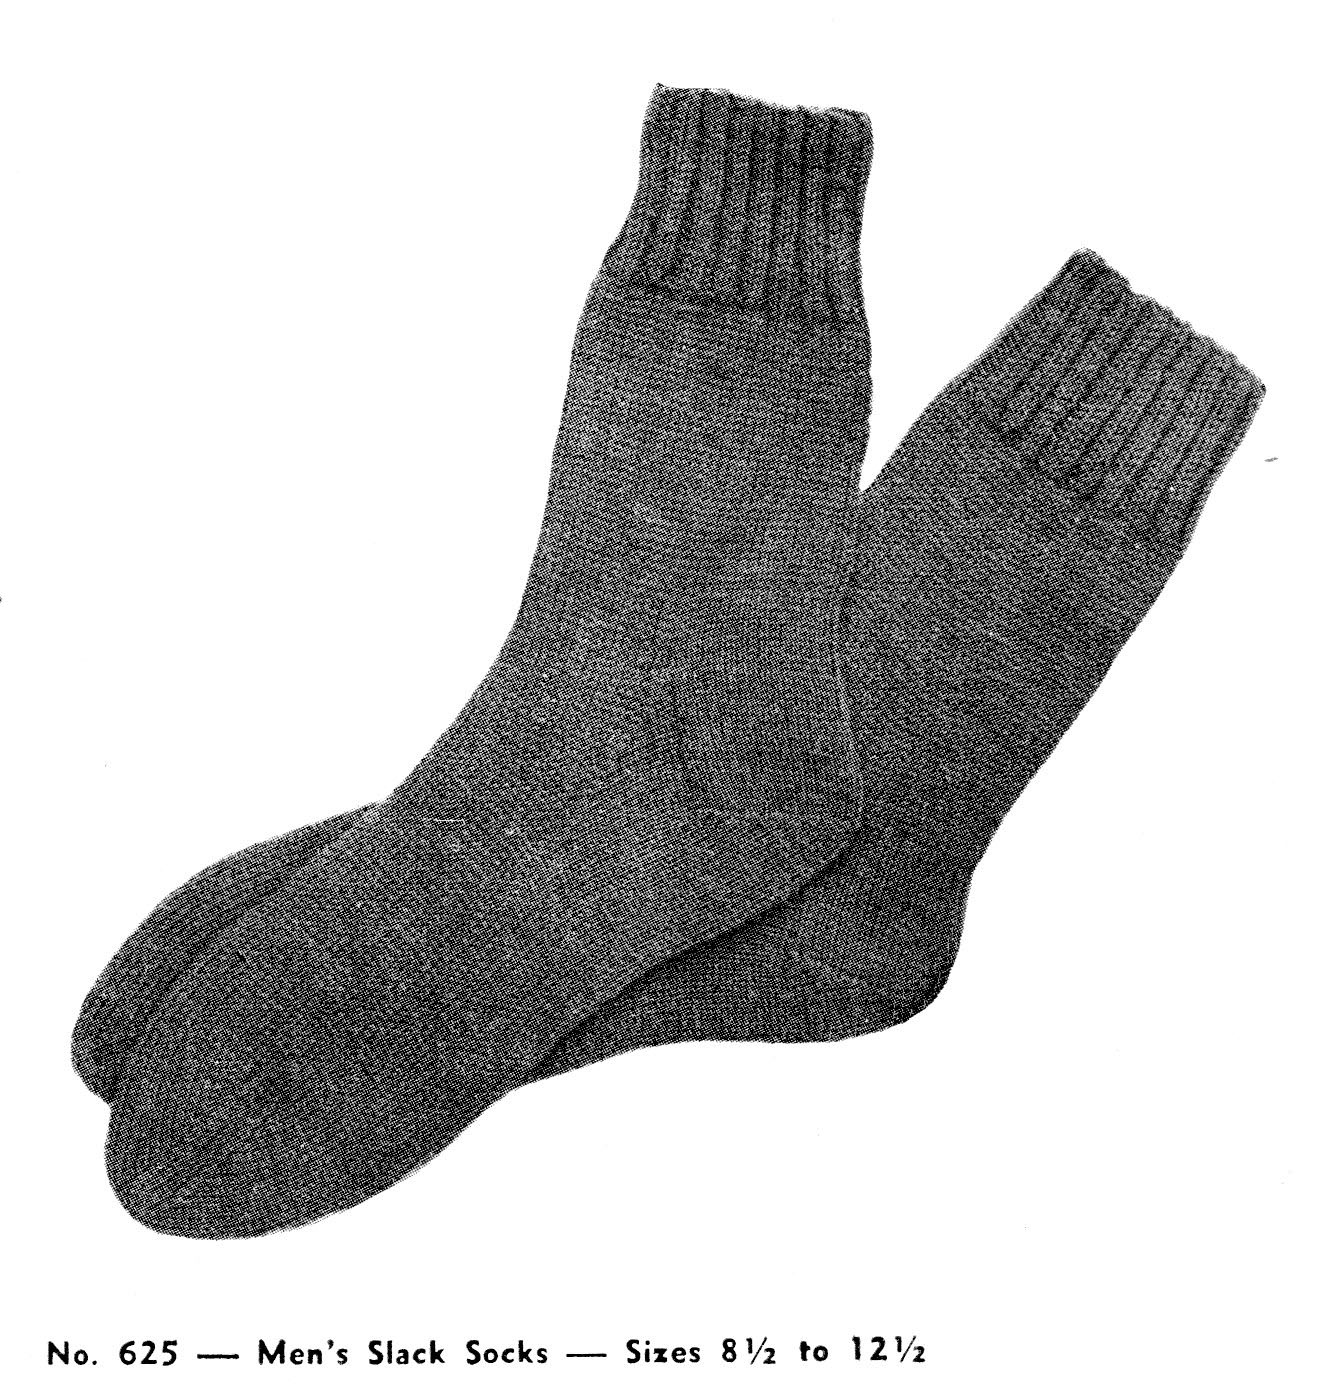 Men's Socks Knitting Pattern Vintage Crafts and More